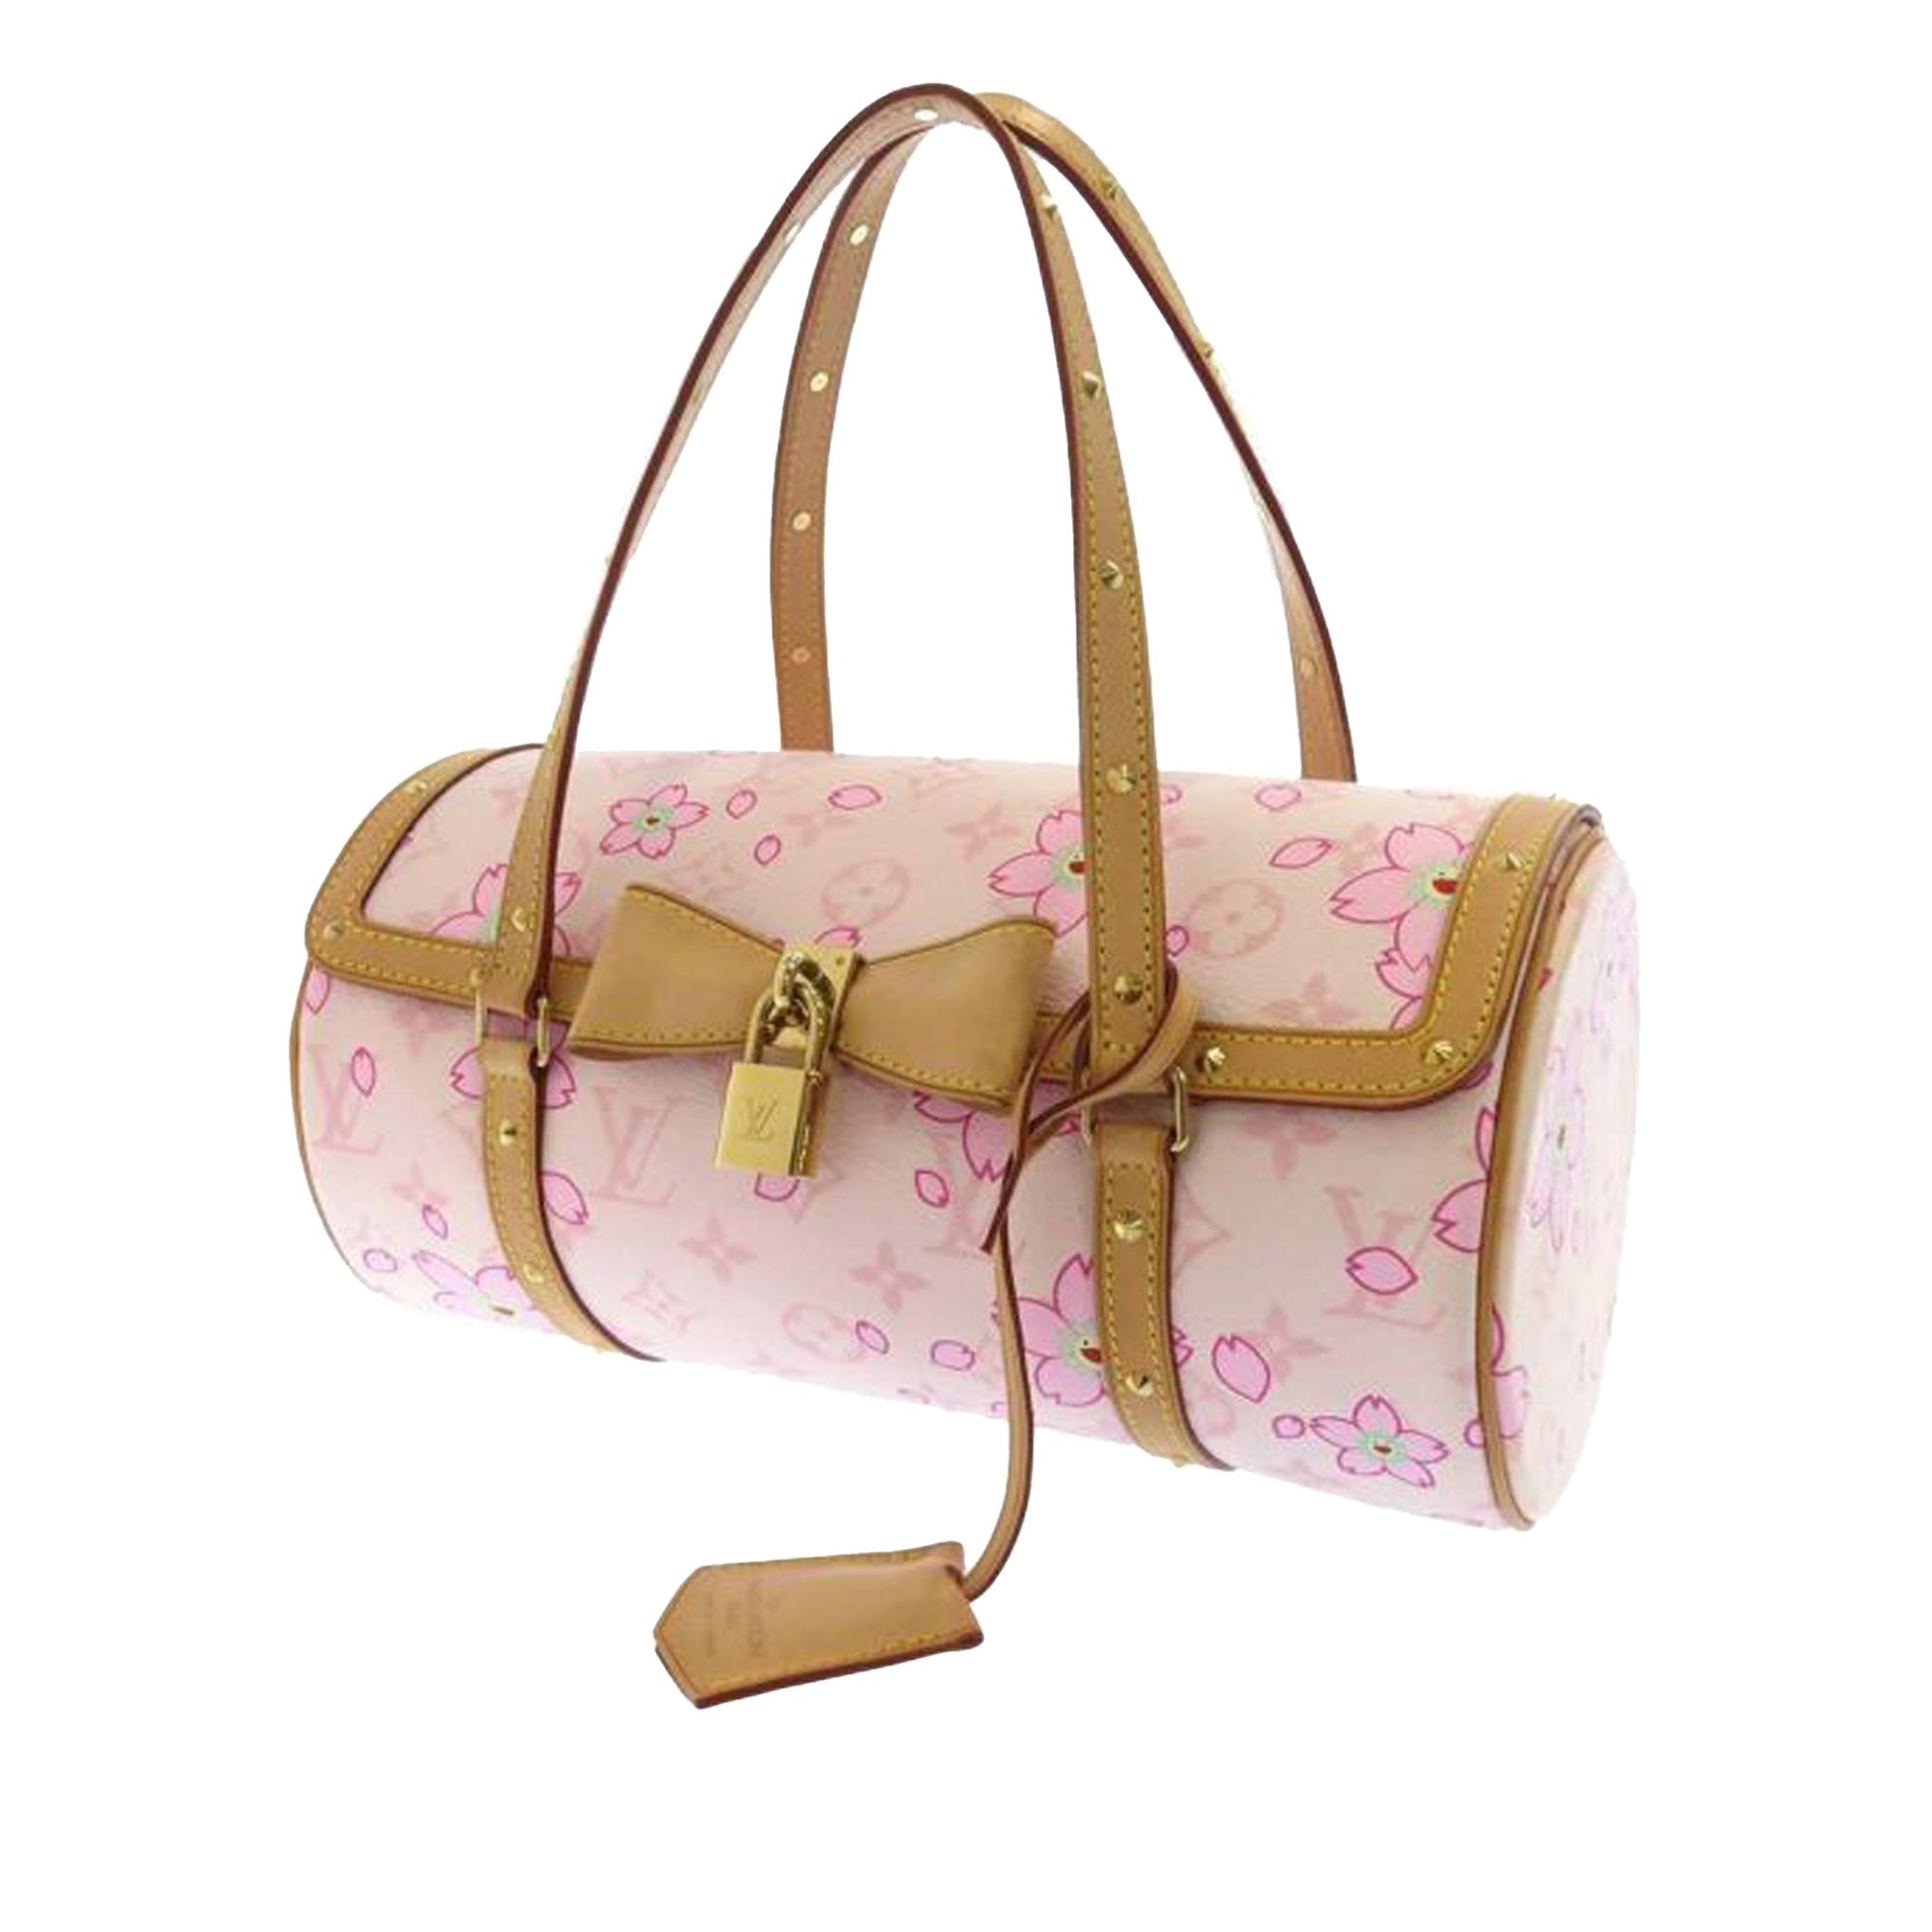 Sold at Auction: Louis Vuitton, Louis Vuitton Takashi Murakami Cherry  Blossom Papillon